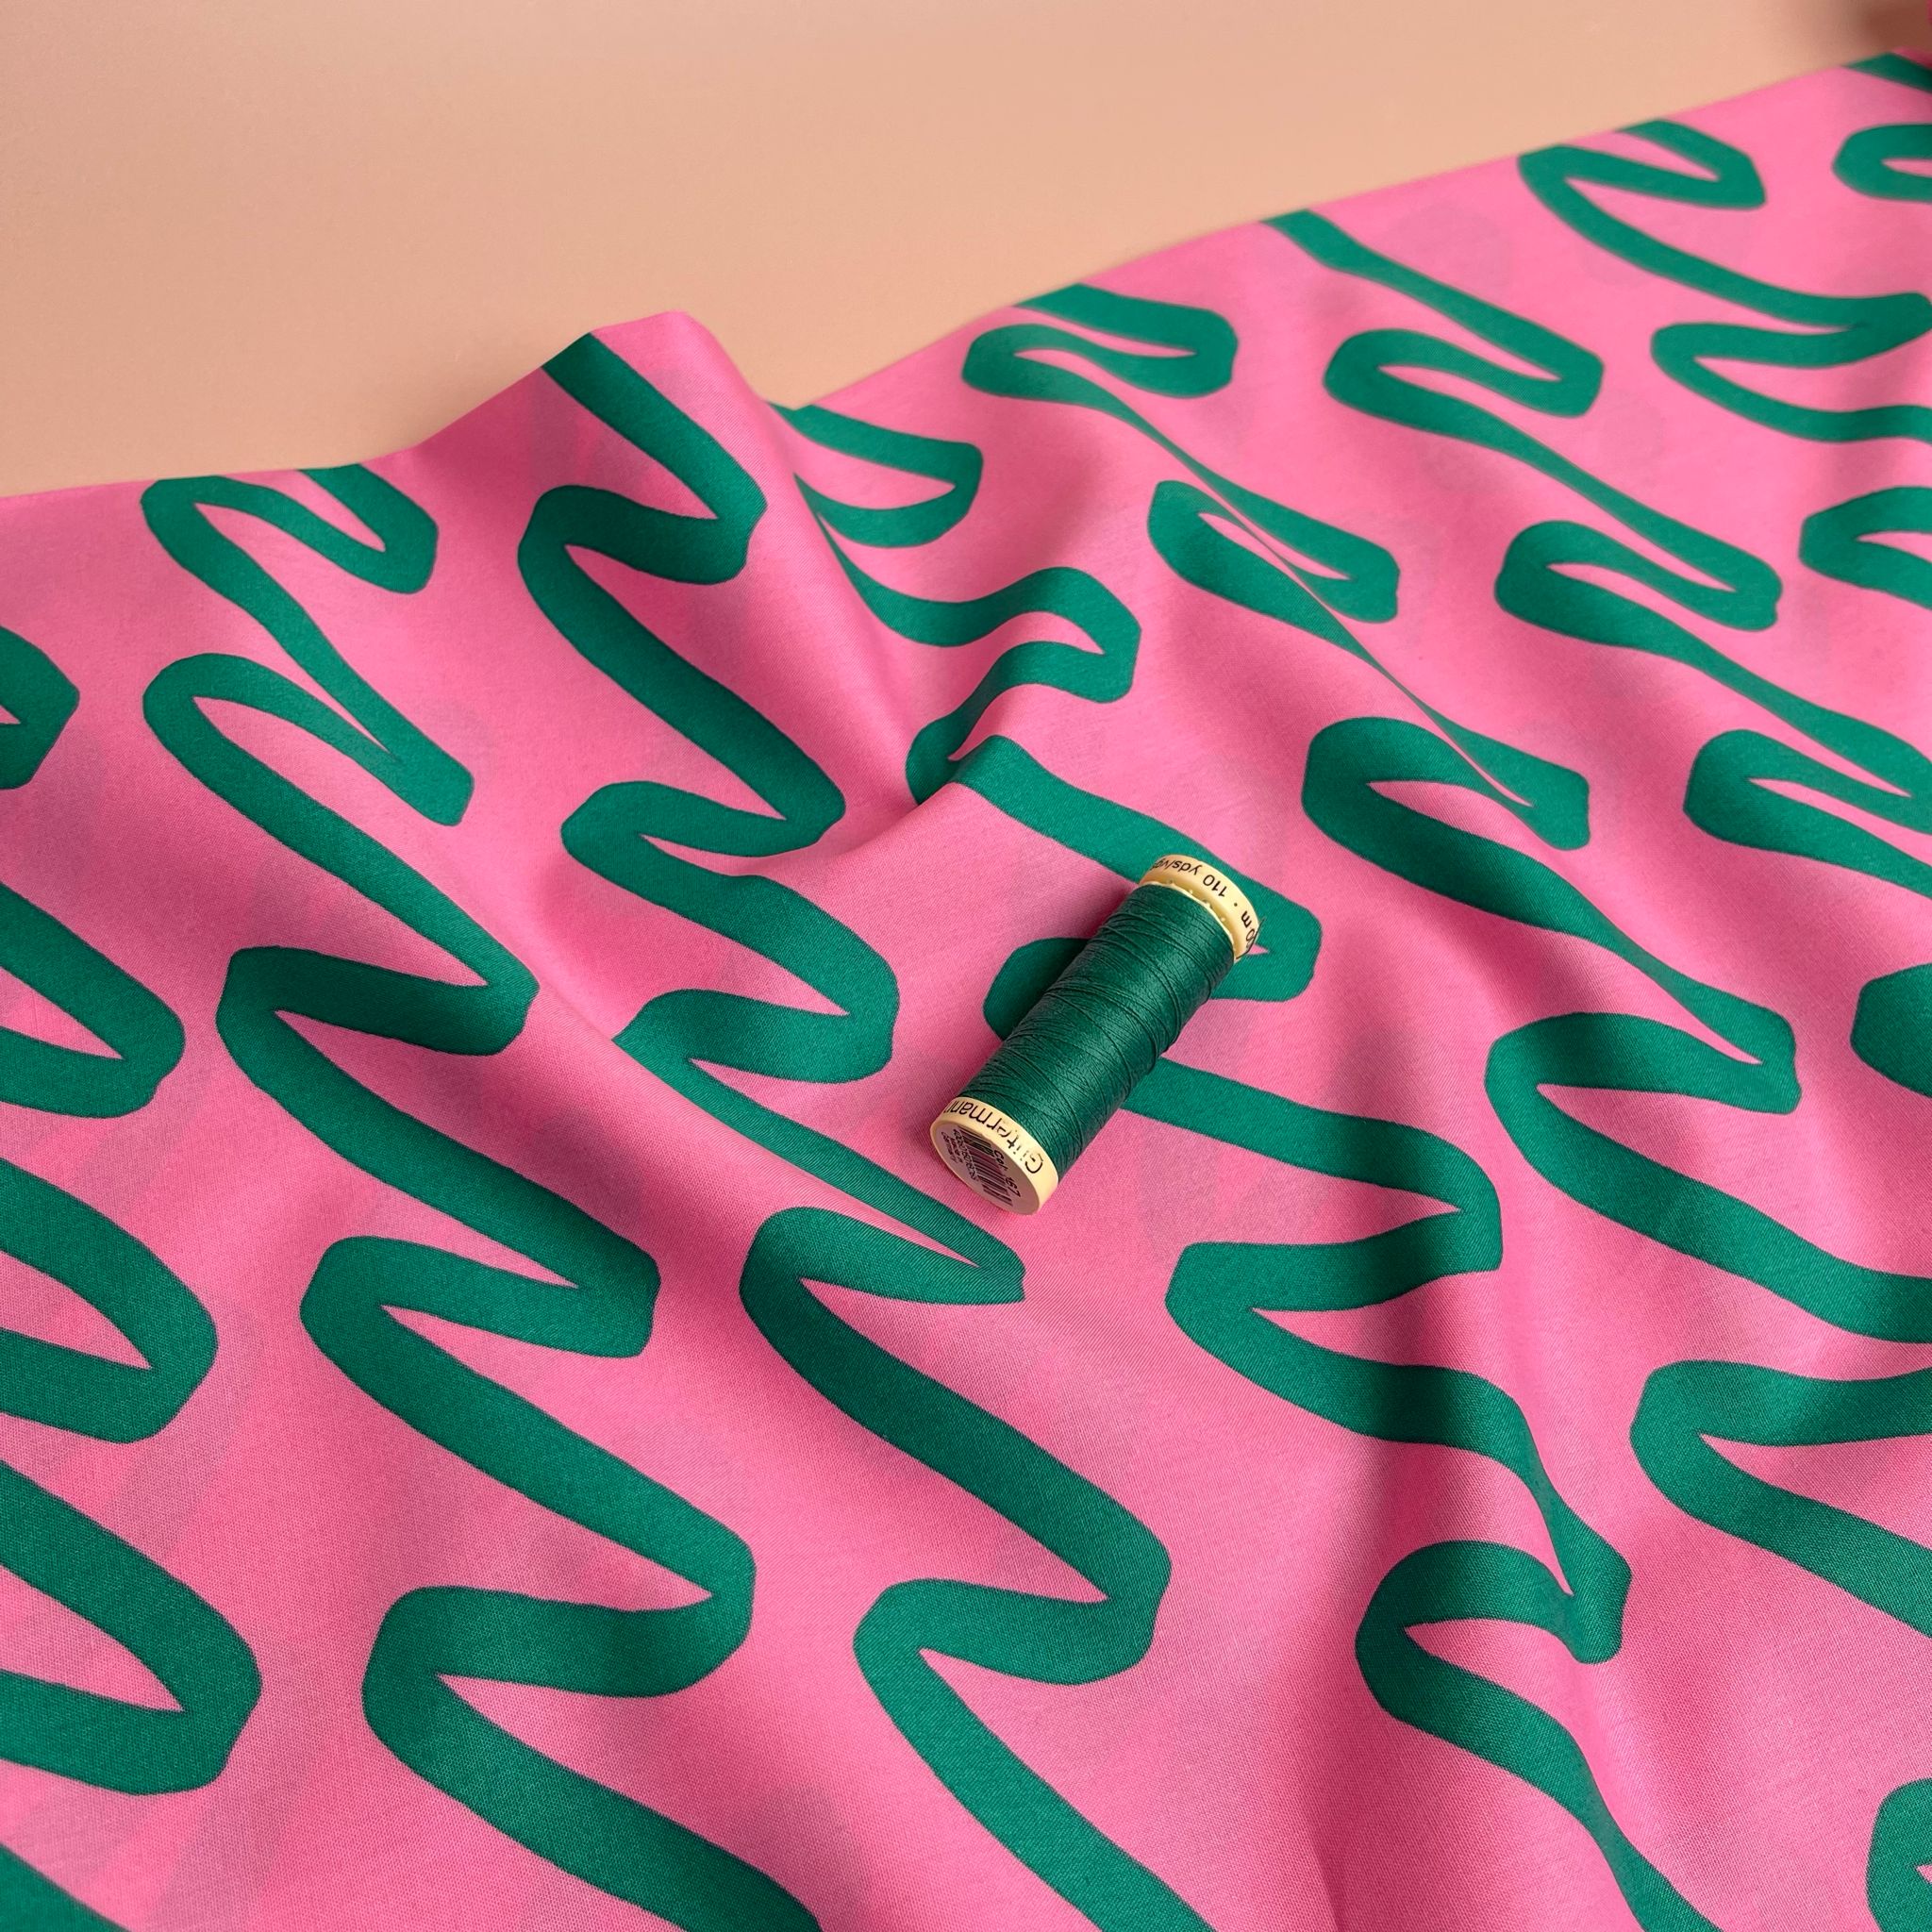 Nerida Hansen - Making Waves on Pink Cotton Poplin Fabric